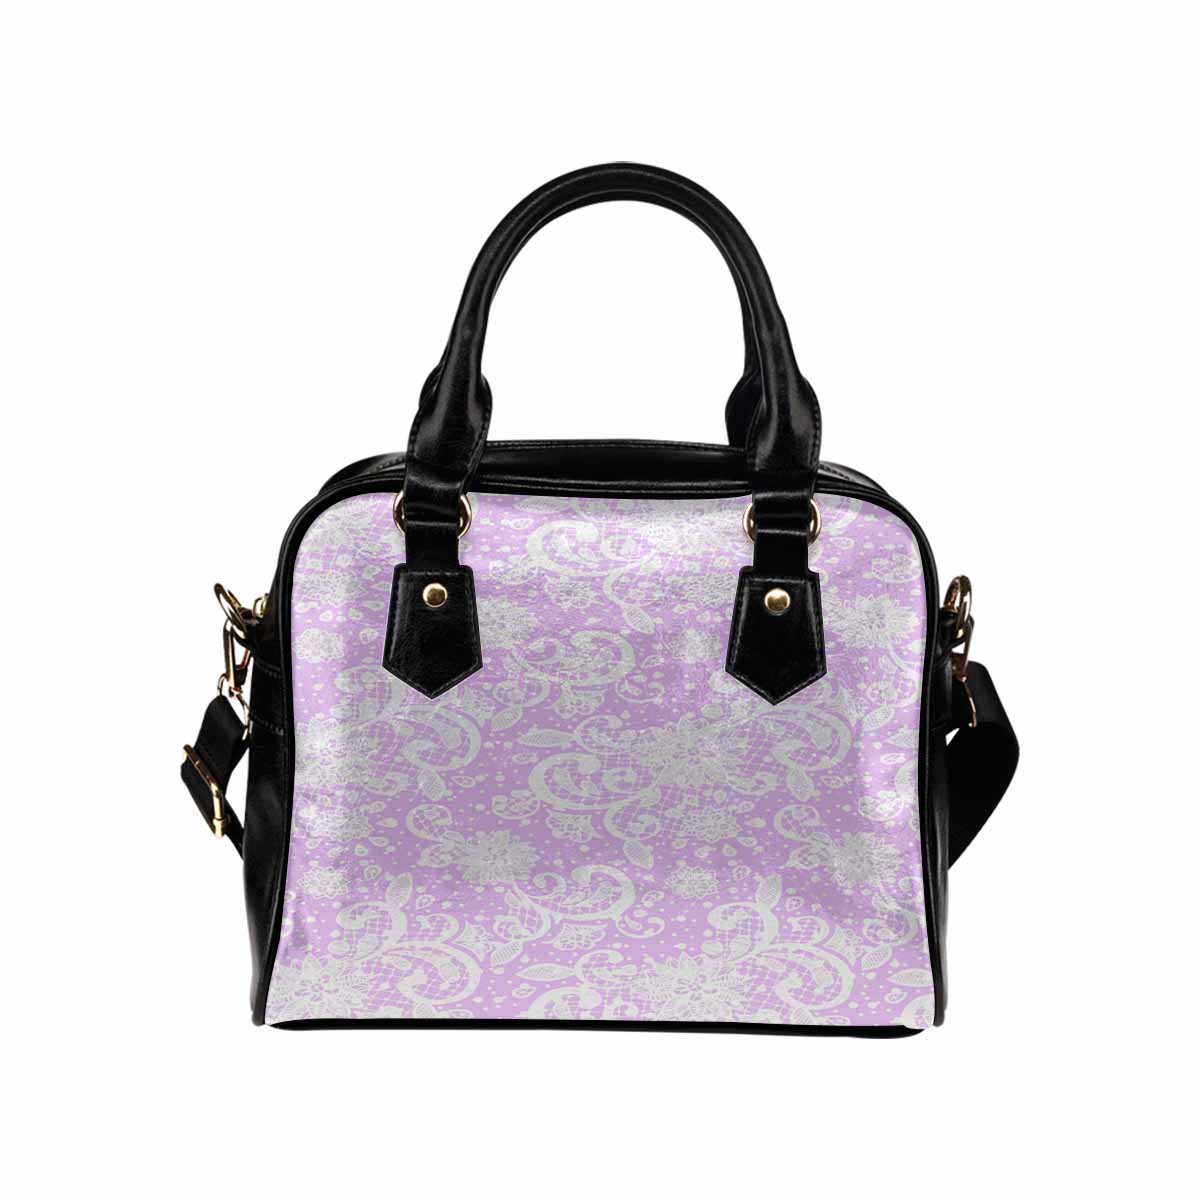 Victorian lace print, cute handbag, Mod 19163453, design 06